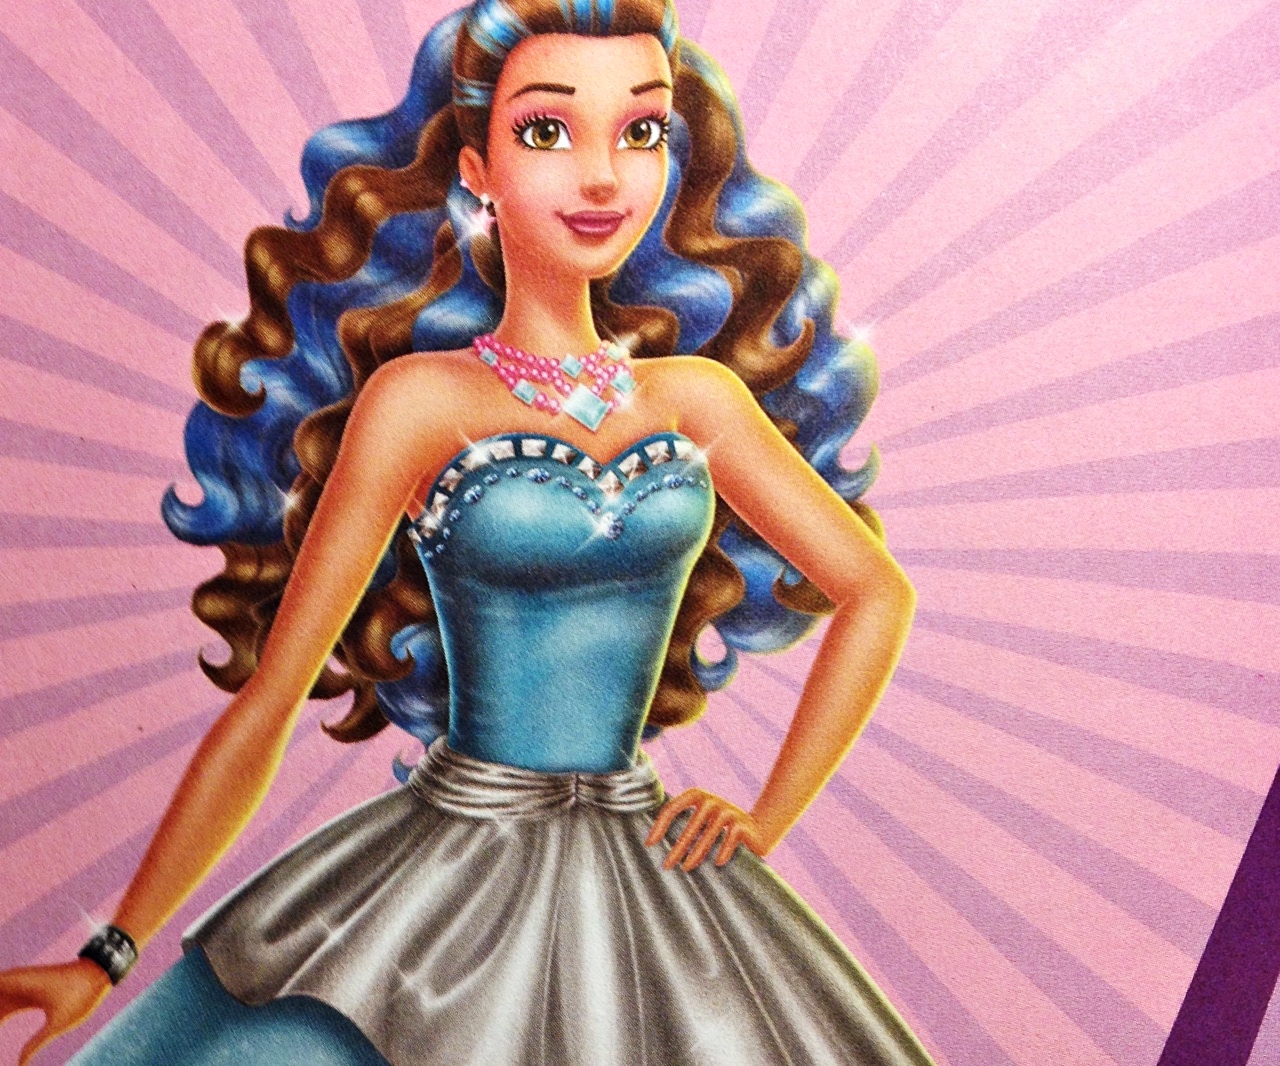 Barbie ann стрипчат. Принцесса Вэл. Барби из мультфильма.